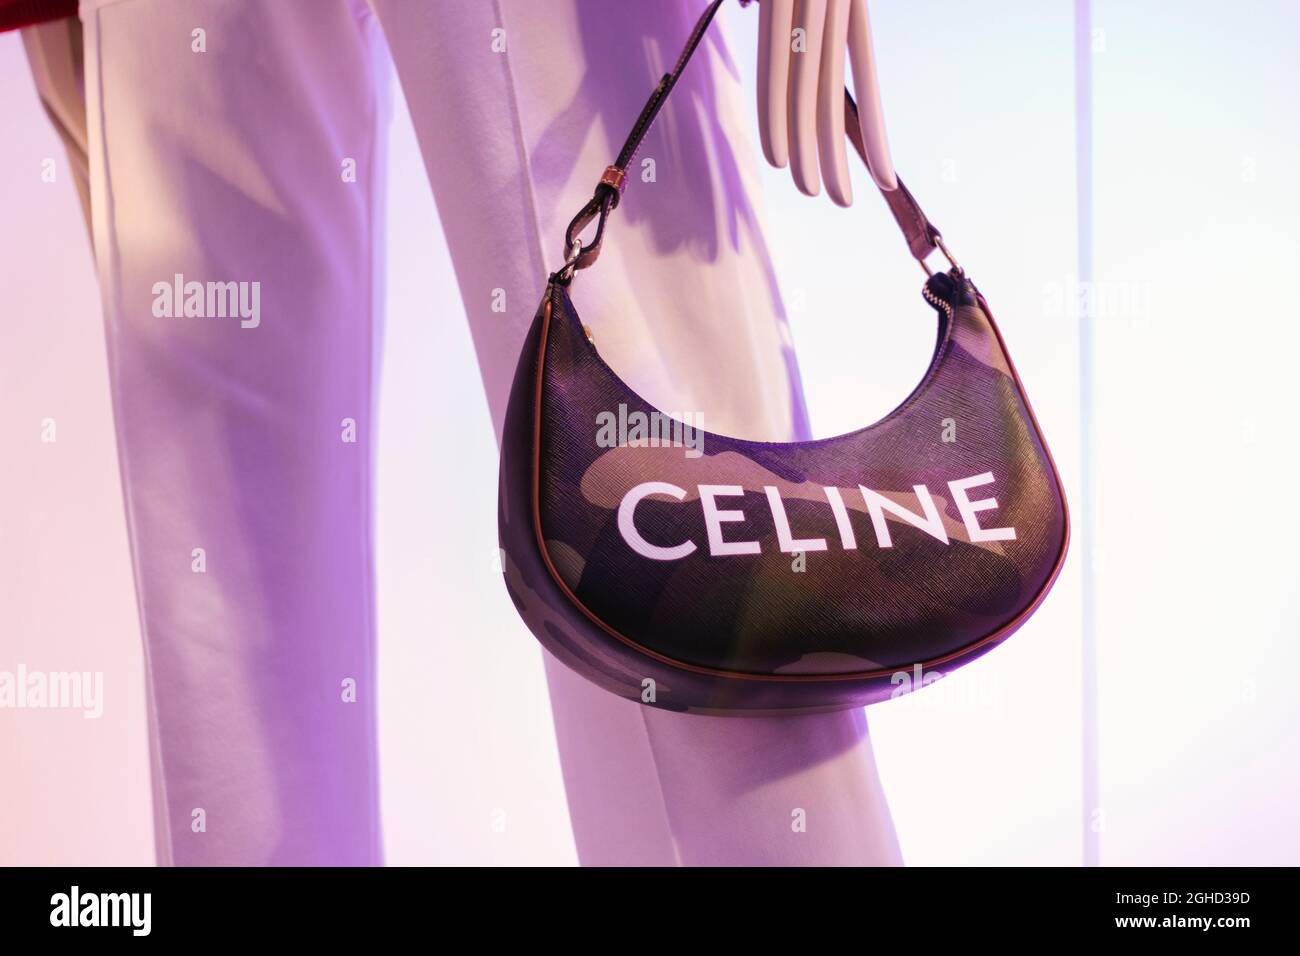 39 Celine Handbags Price Images, Stock Photos, 3D objects, & Vectors